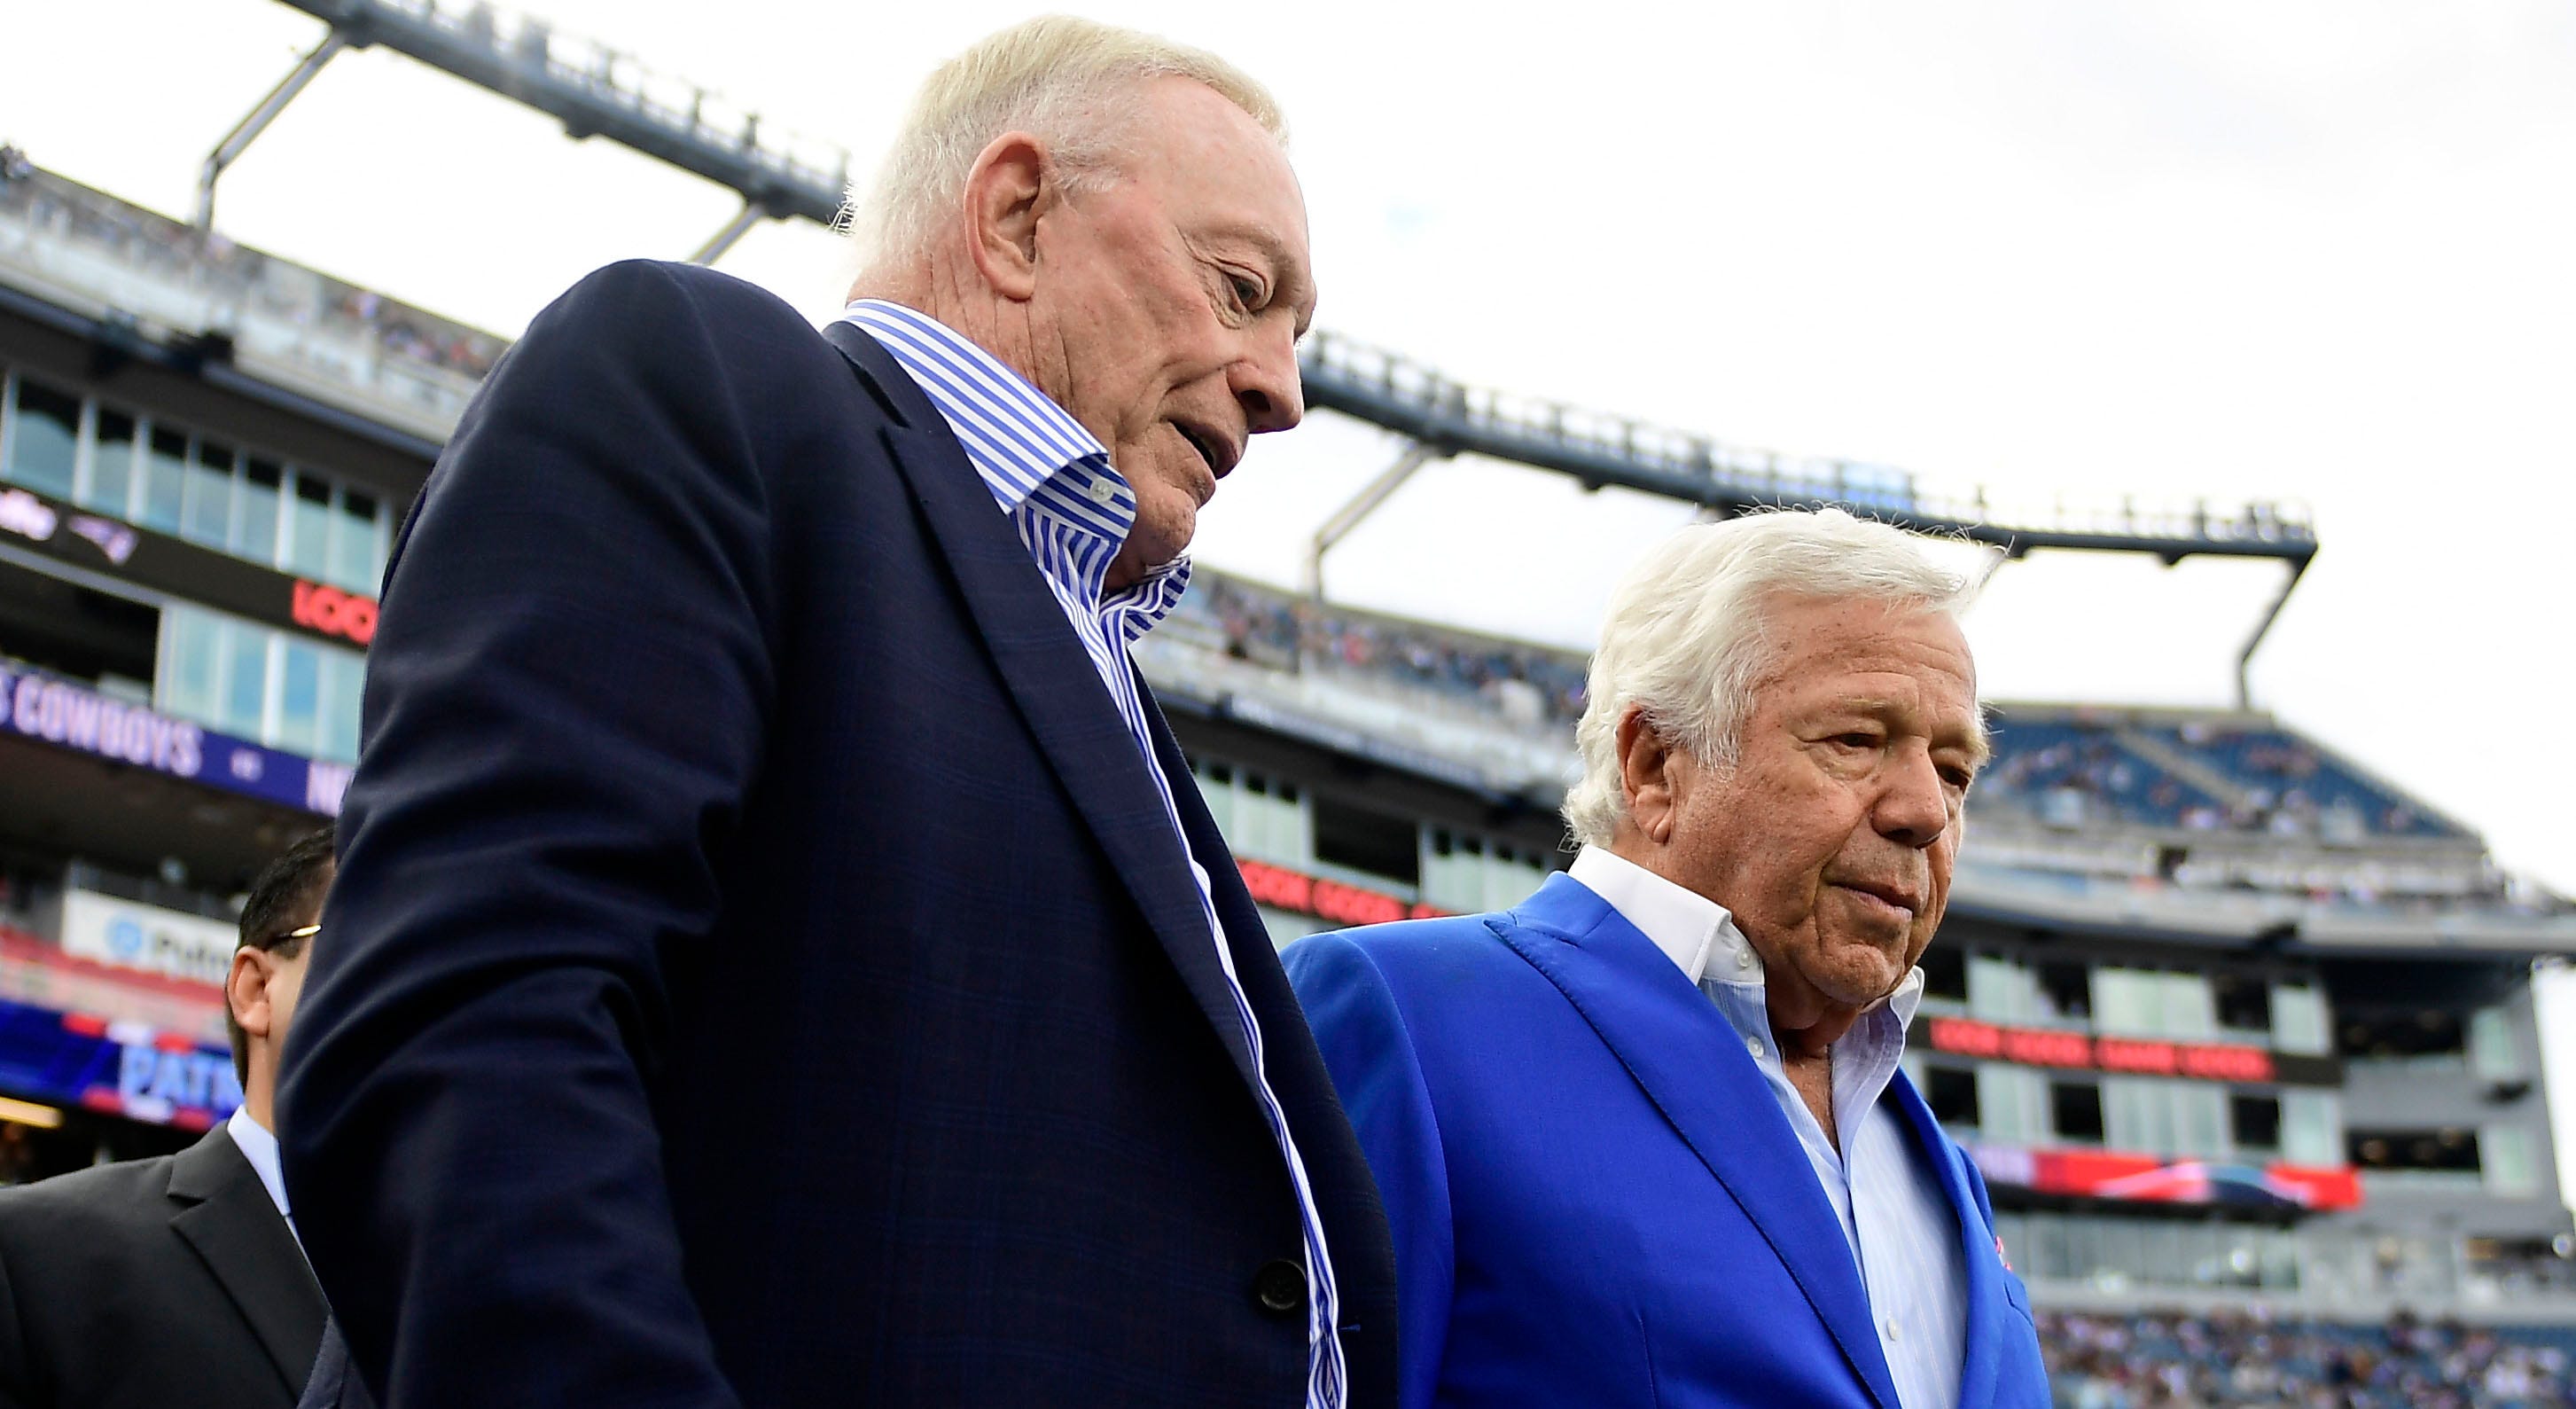 Cowboys' Jerry Jones, Patriots' Robert Kraft got into heated argument during NFL fall meetings: report